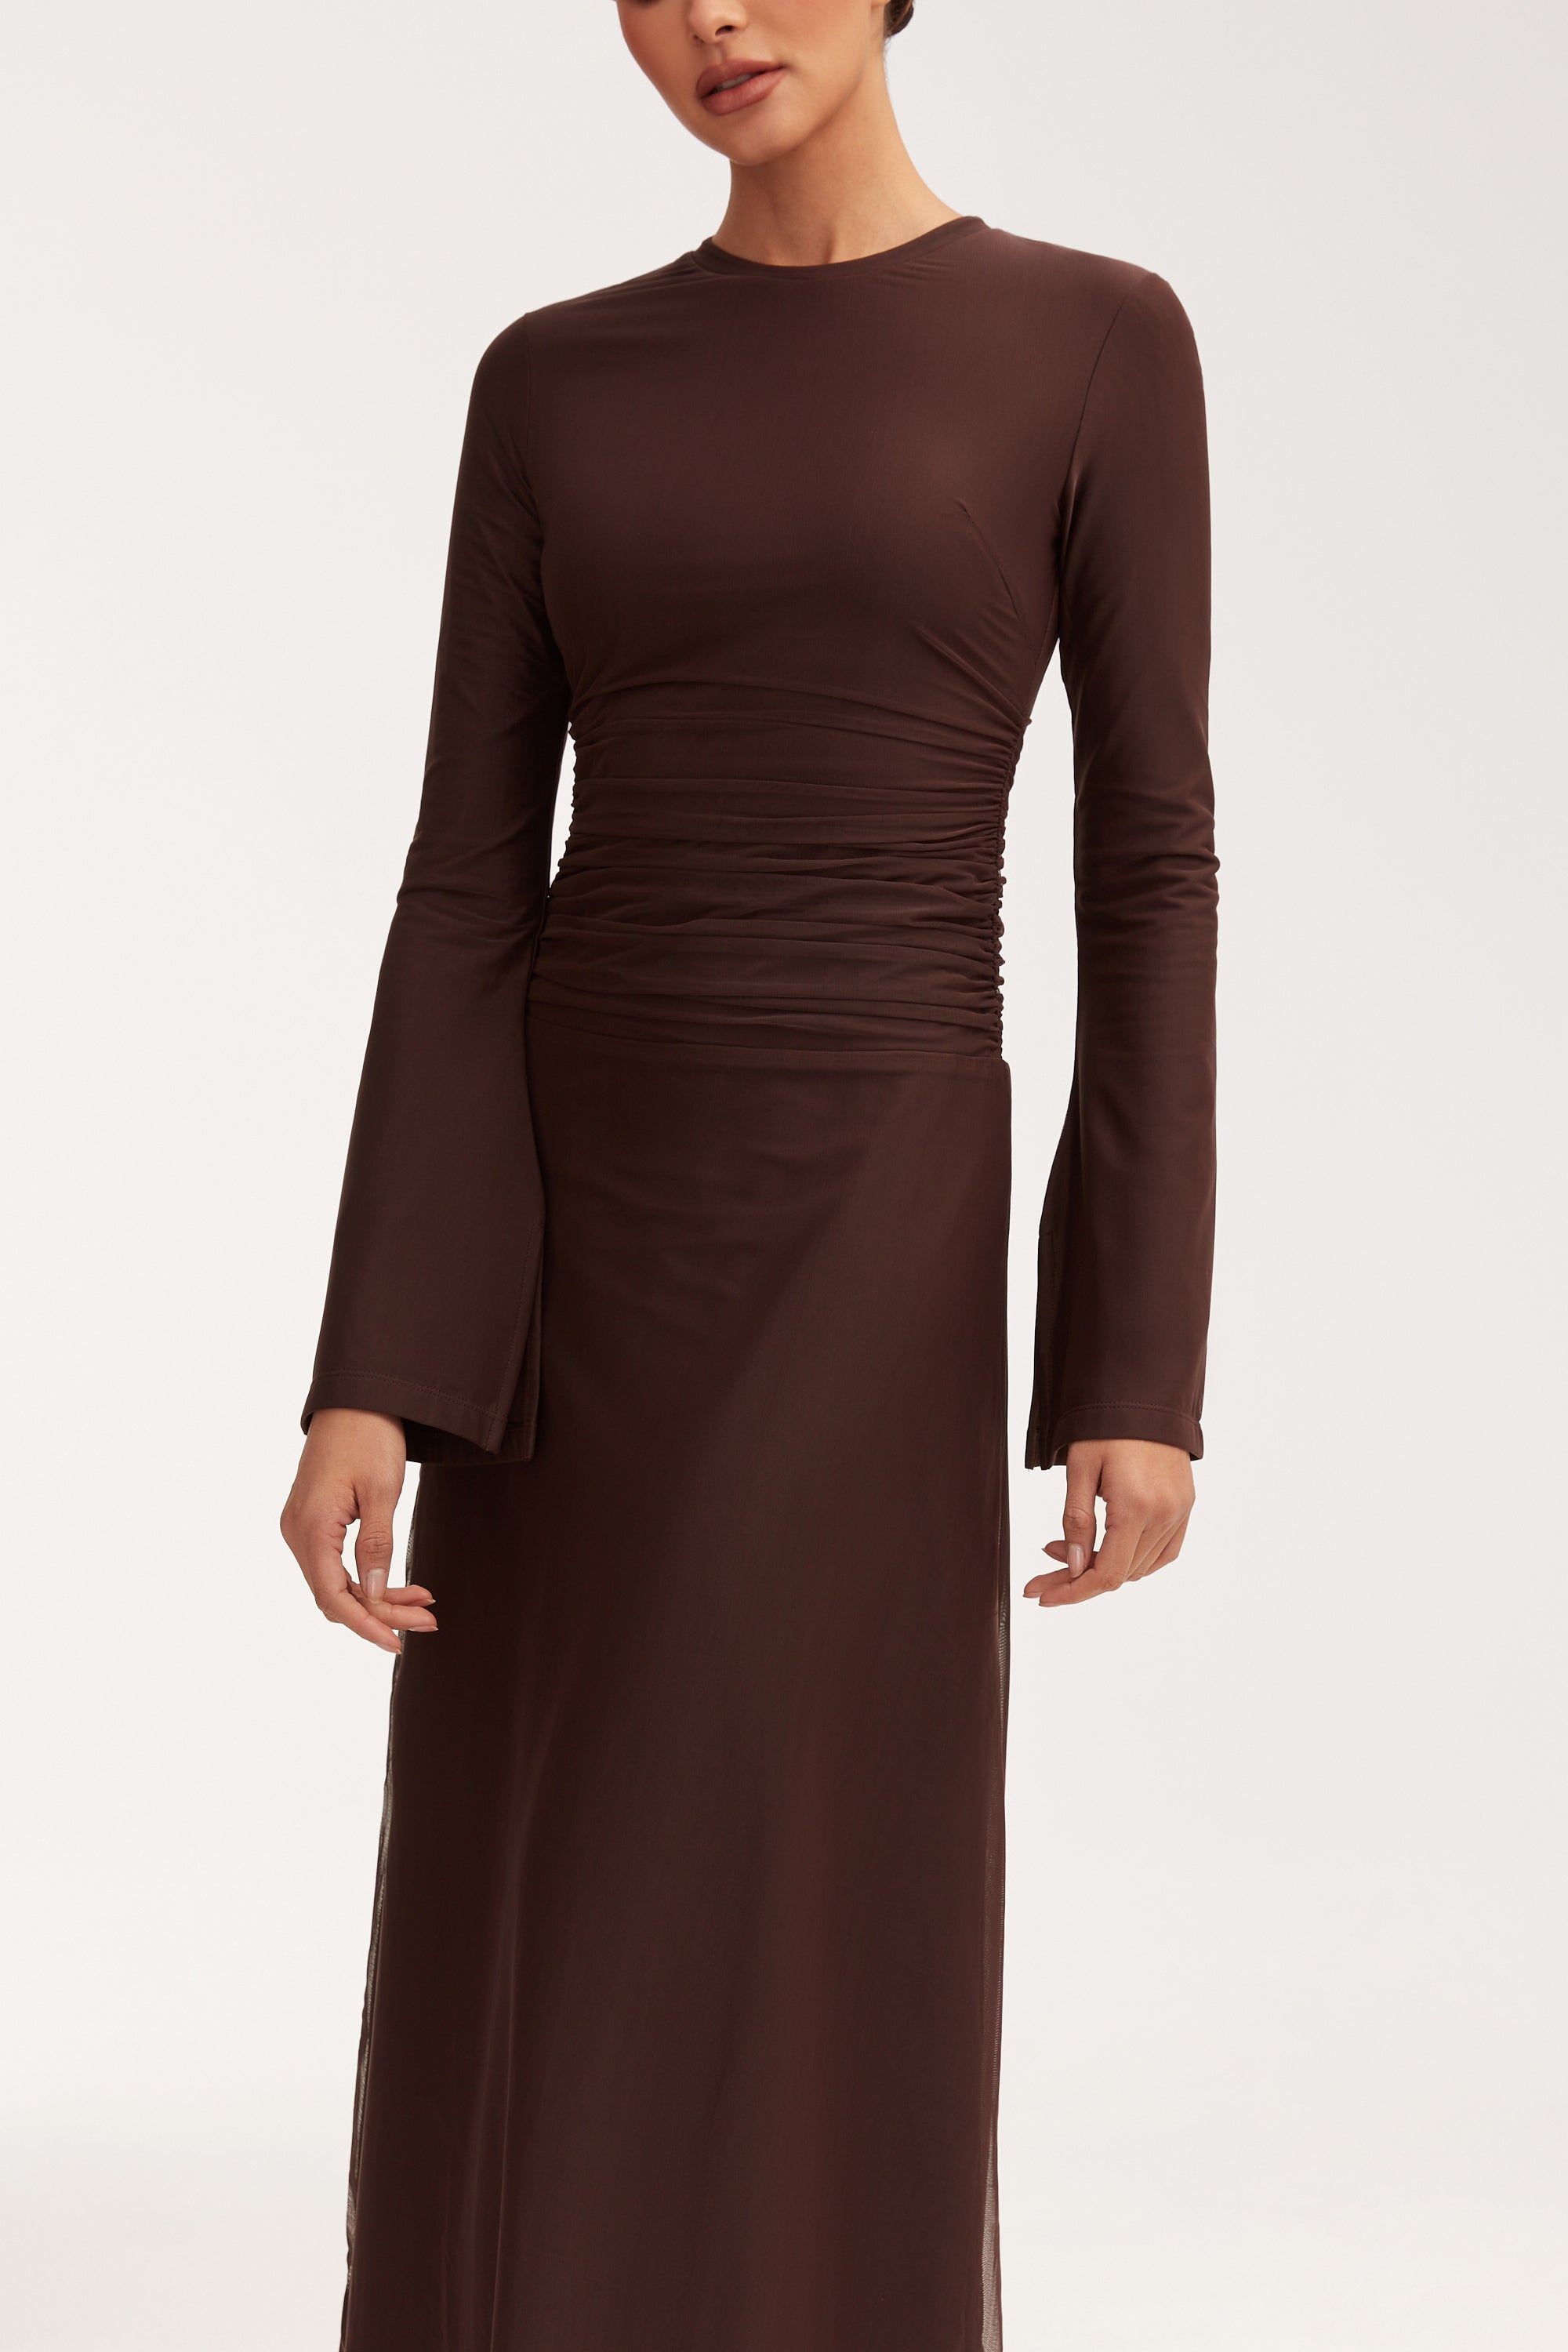 Adelina Rouched Mesh Maxi Dress - Chocolate Plum Dresses Veiled 